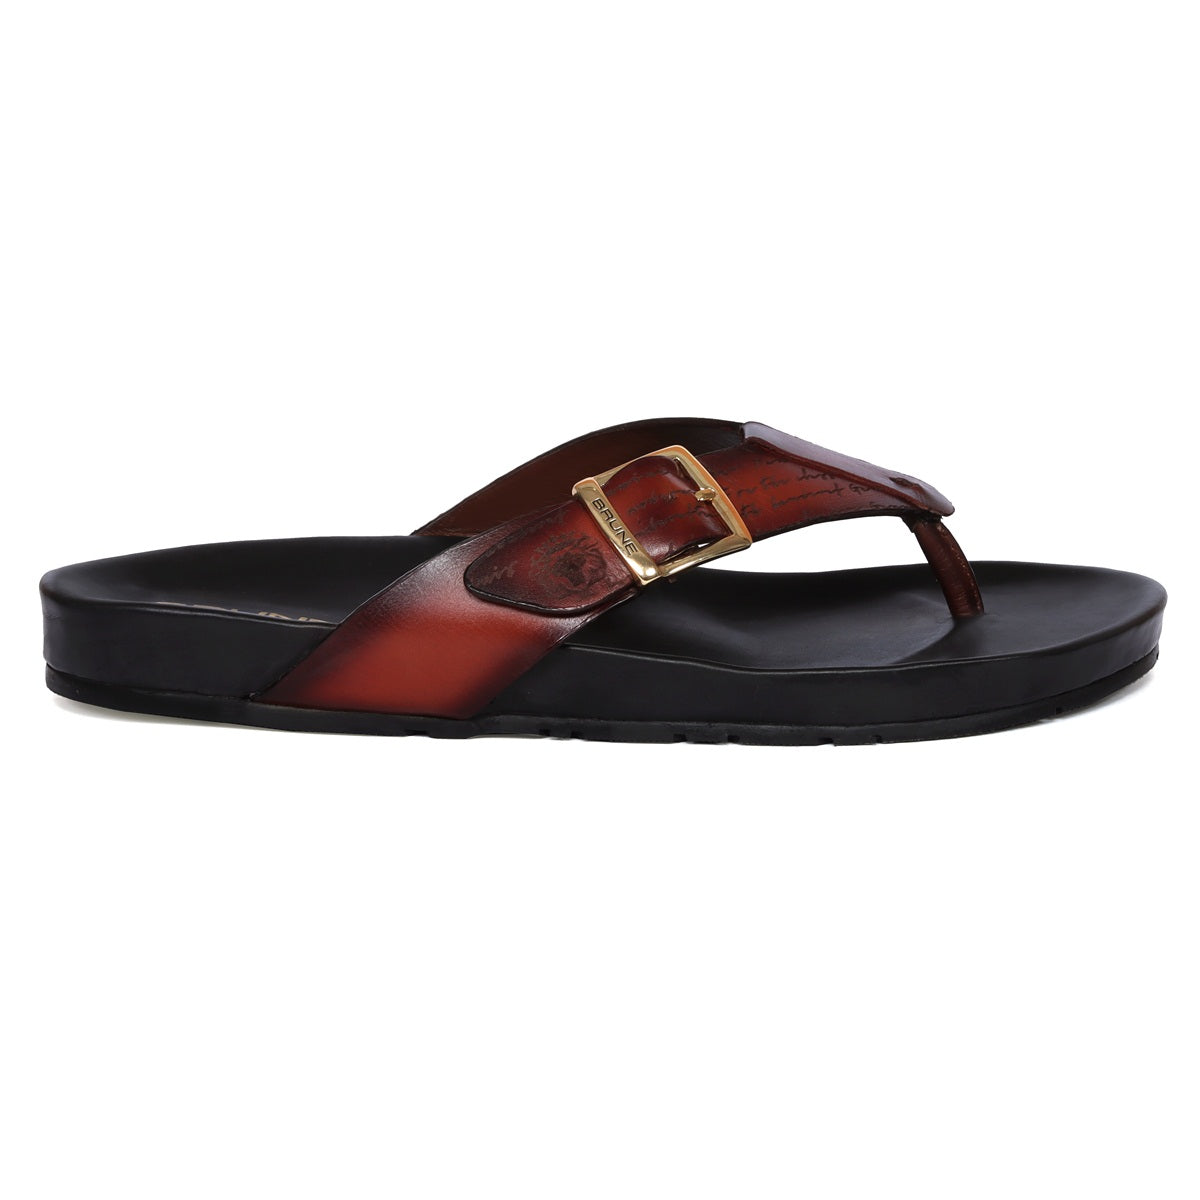 Men's slide sandal with straps